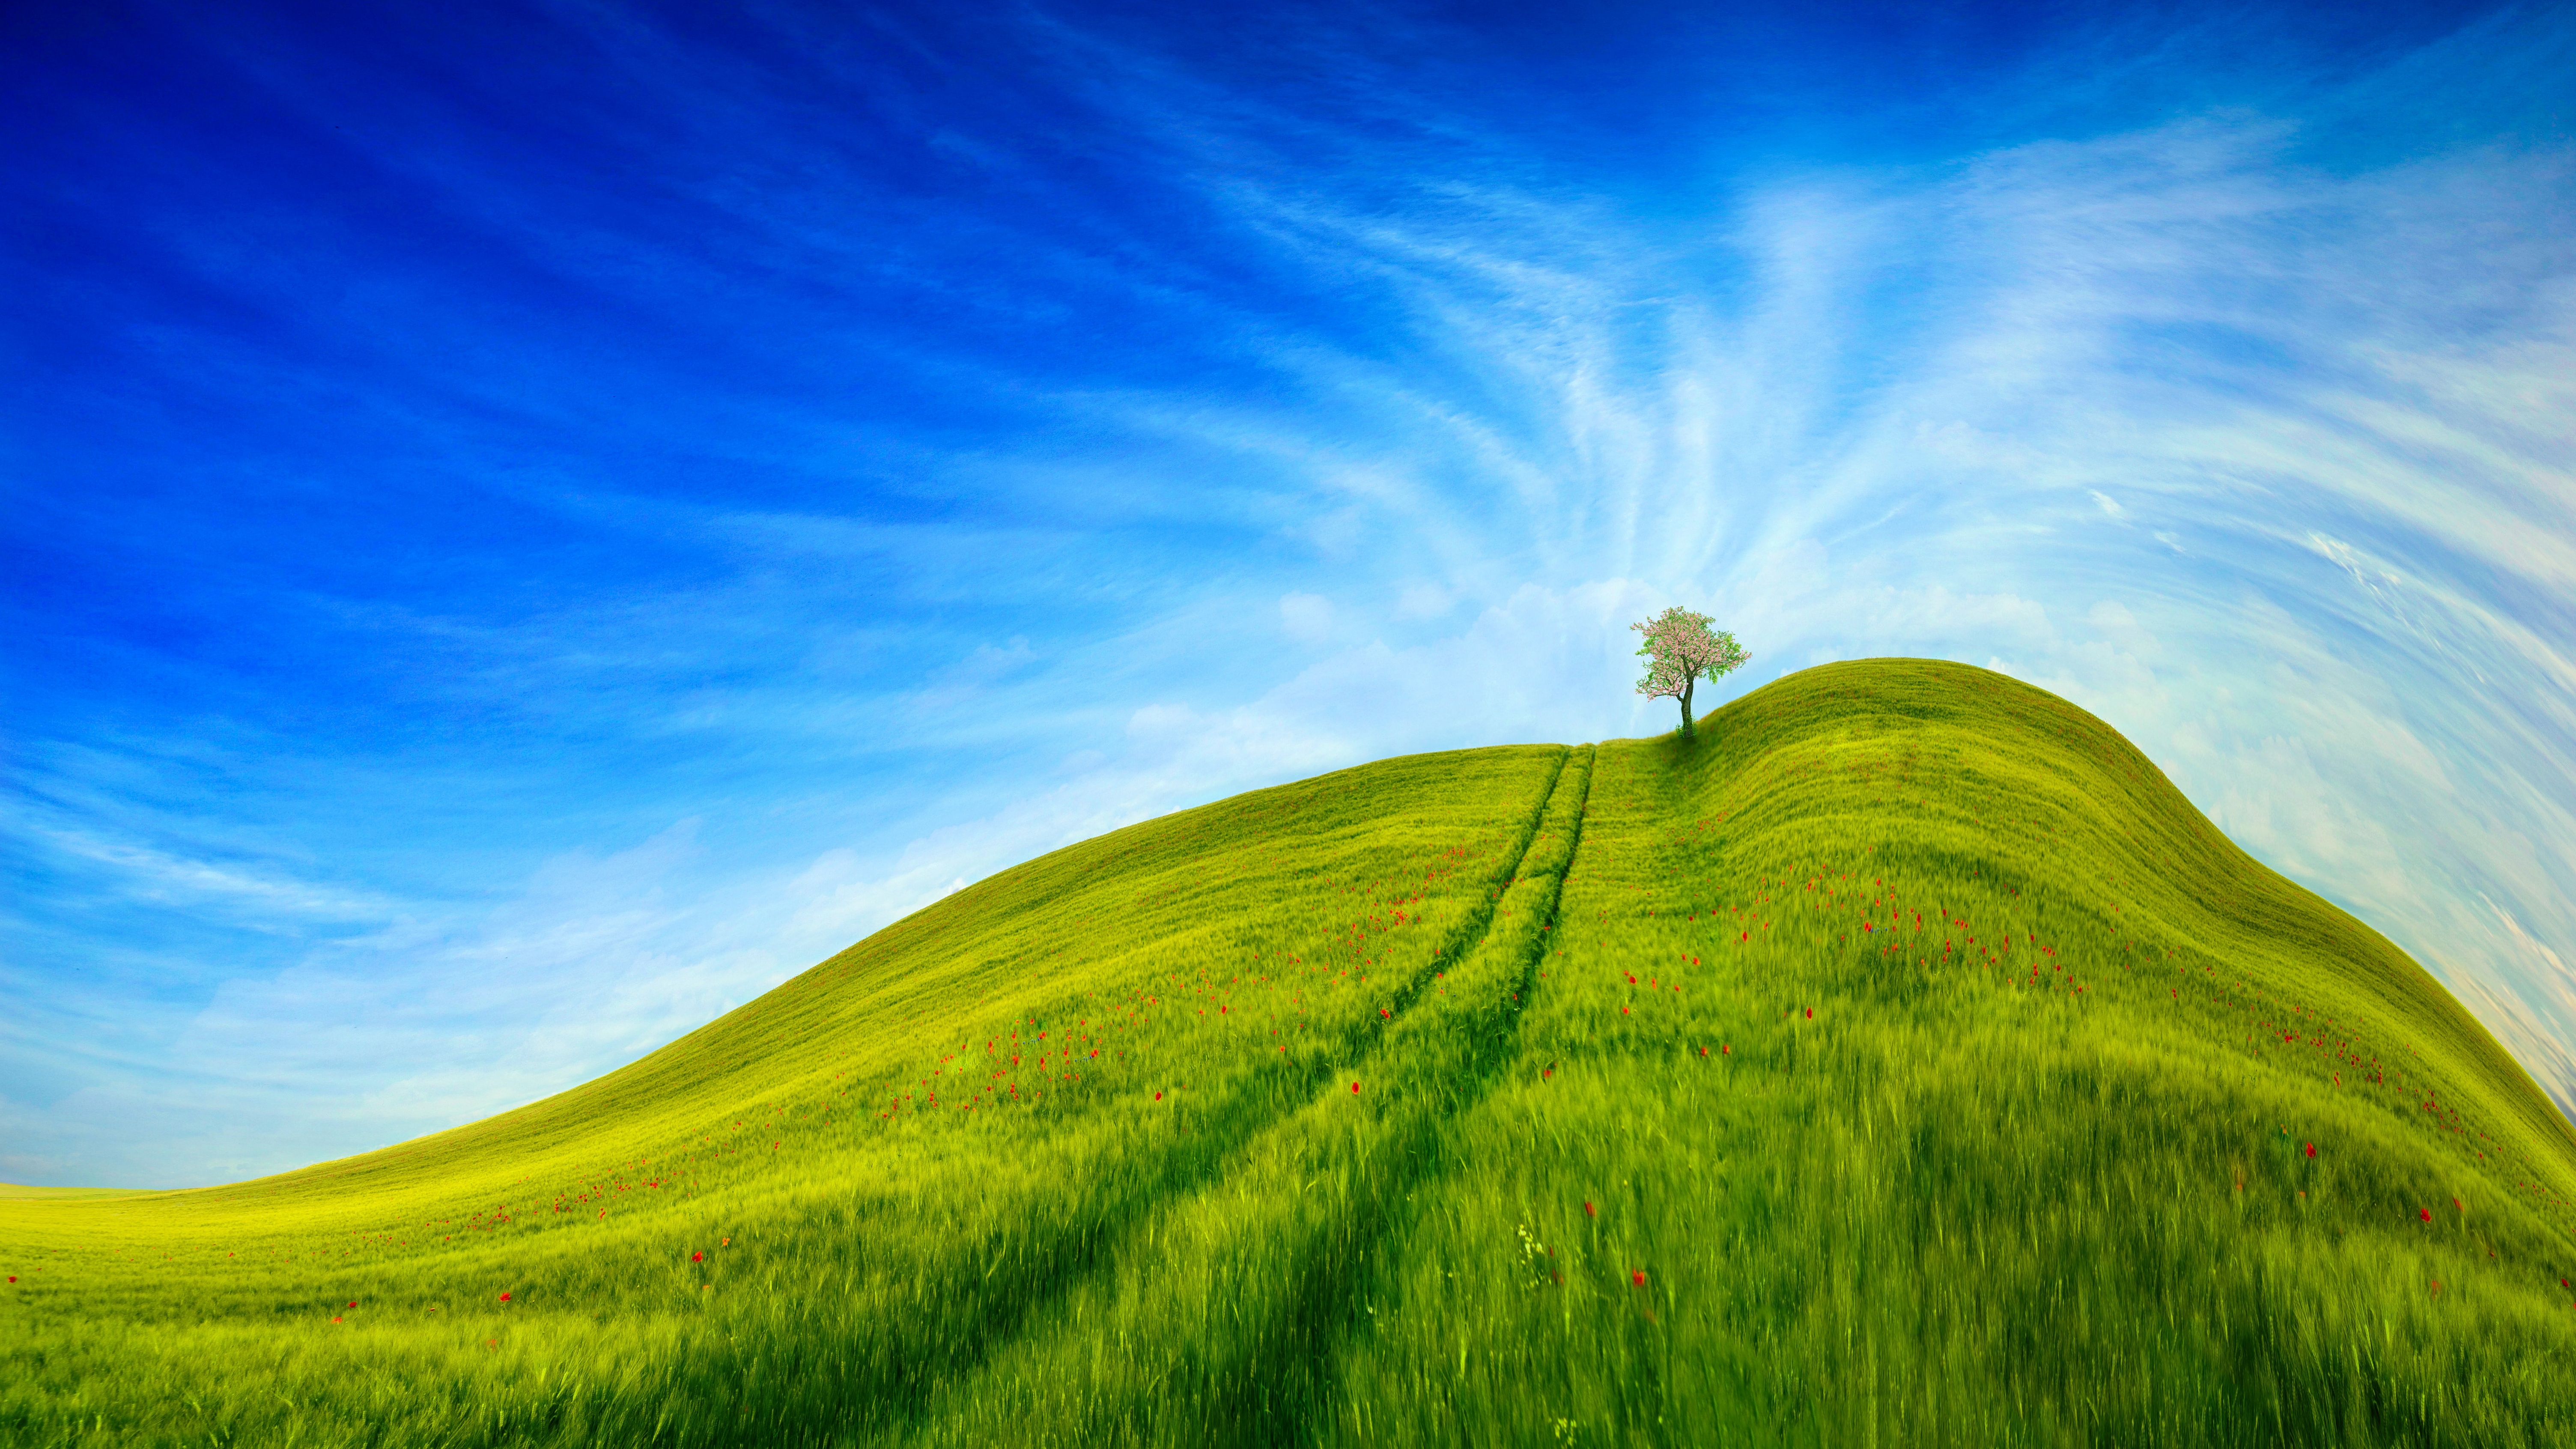 Grass Landscape Wallpaper 4K, Blue Sky, Tree, Nature, #2435